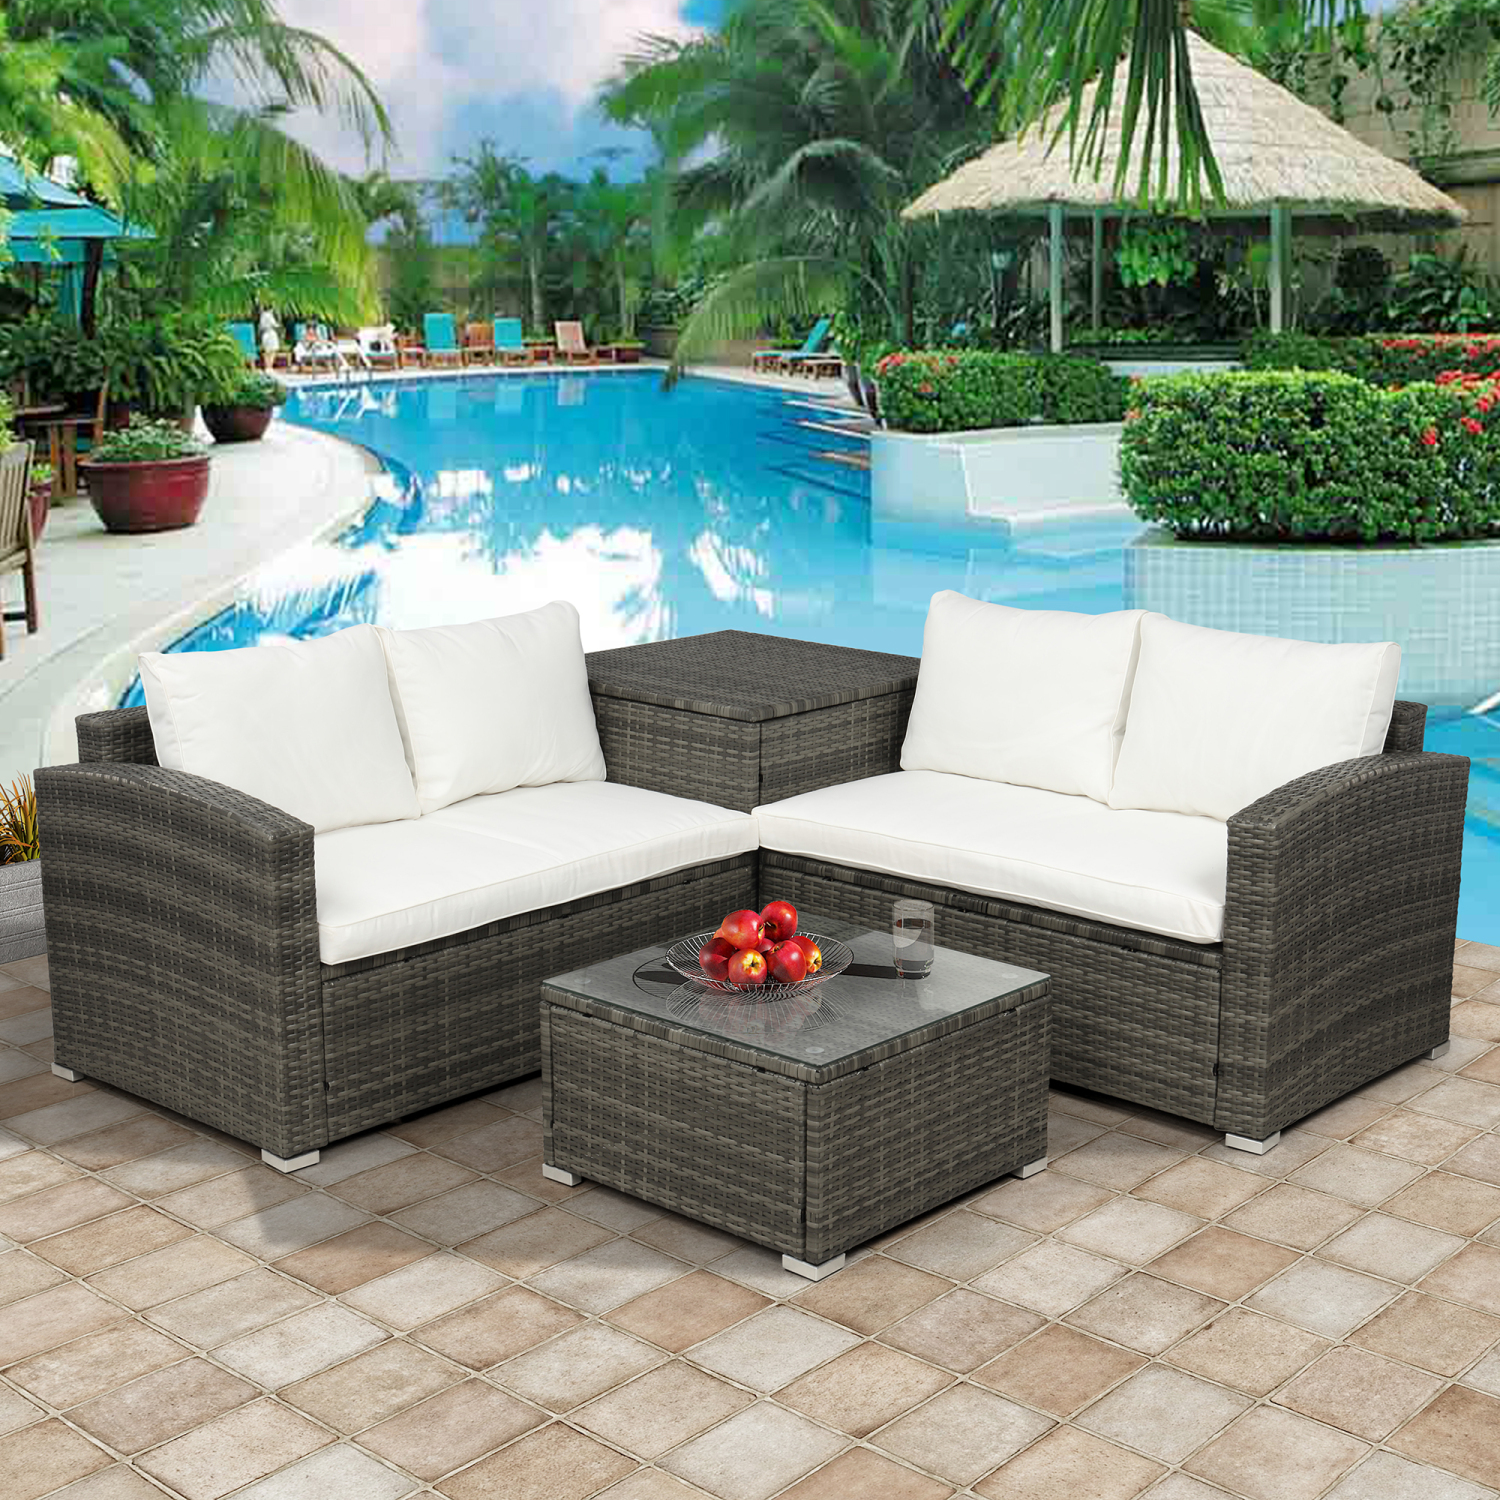 4 PCS Outdoor Cushioned PE Rattan Wicker Sectional Sofa Set Garden Patio Furniture Set (Beige Cushion) - image 1 of 1